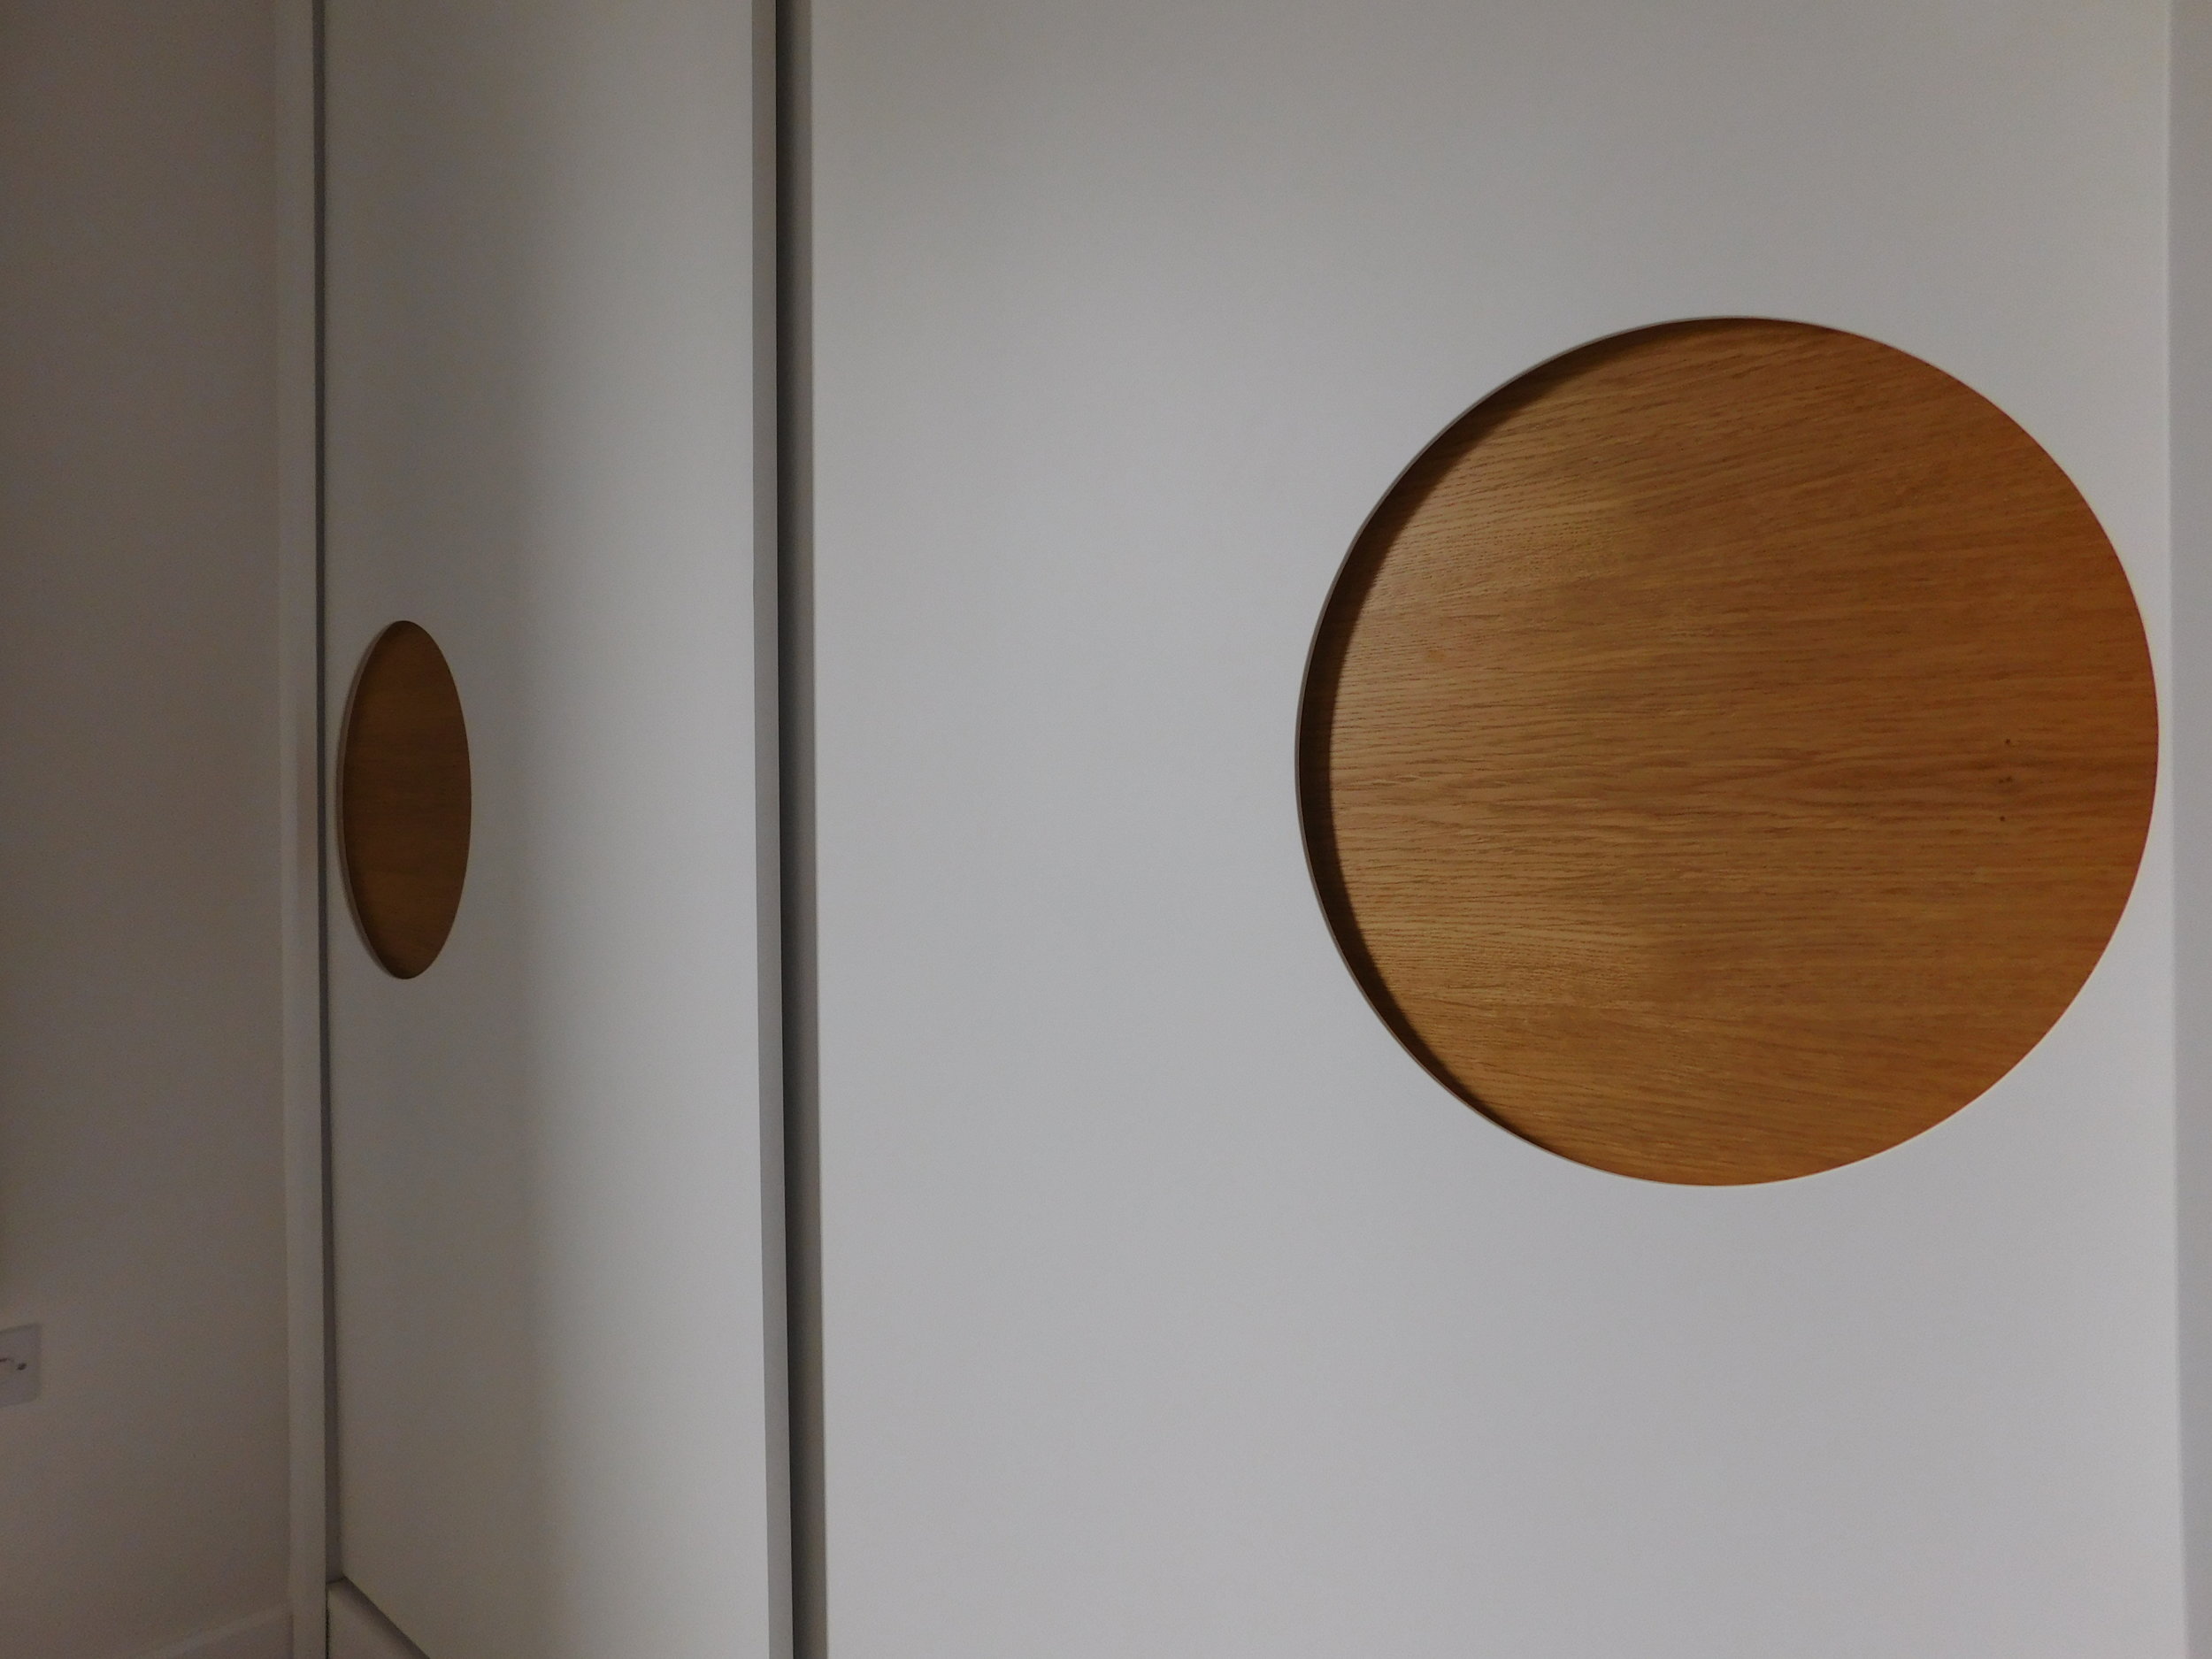 Sliding doors with Oak inset handle panels